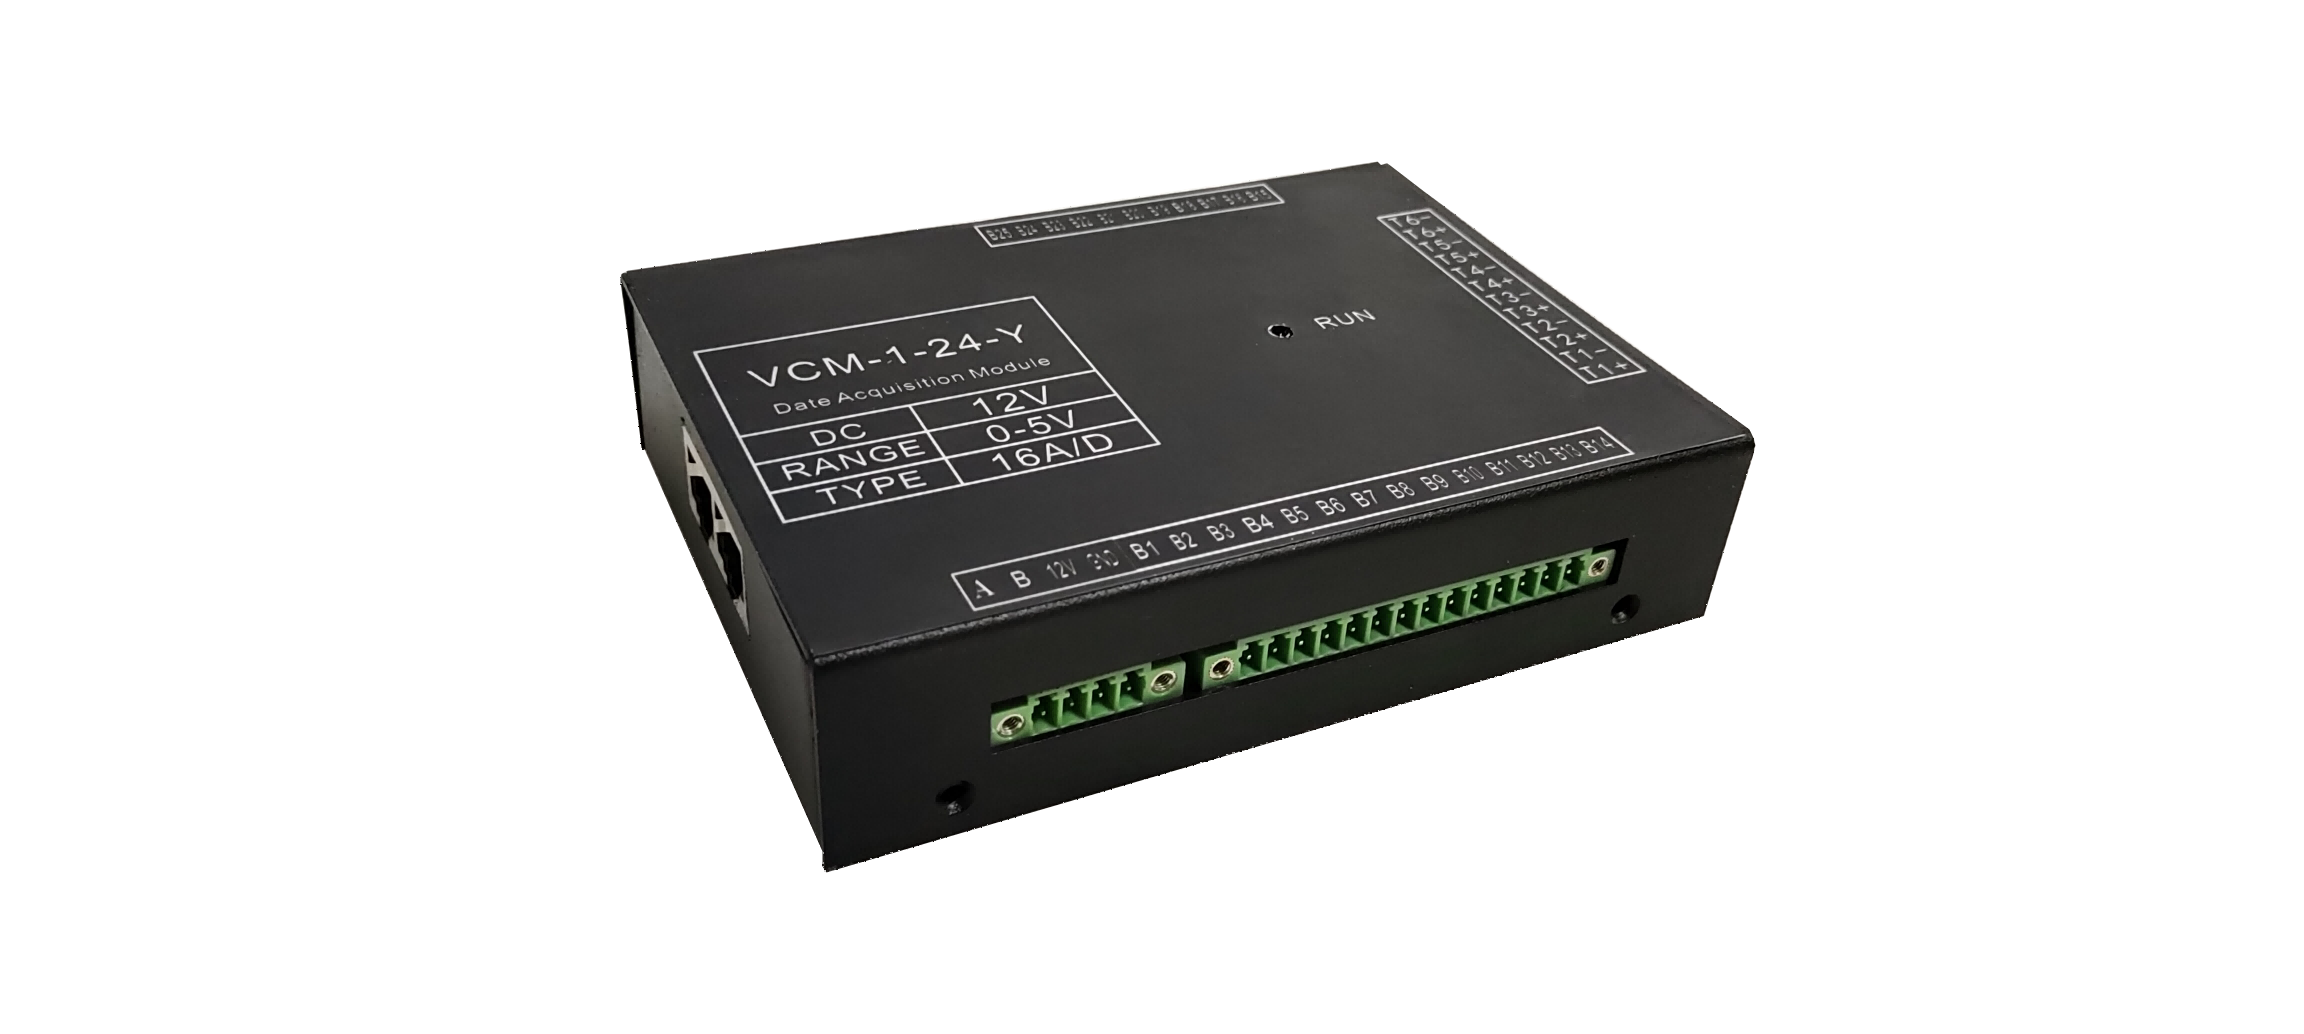 24串单体监测模块VCM-I-24-Y